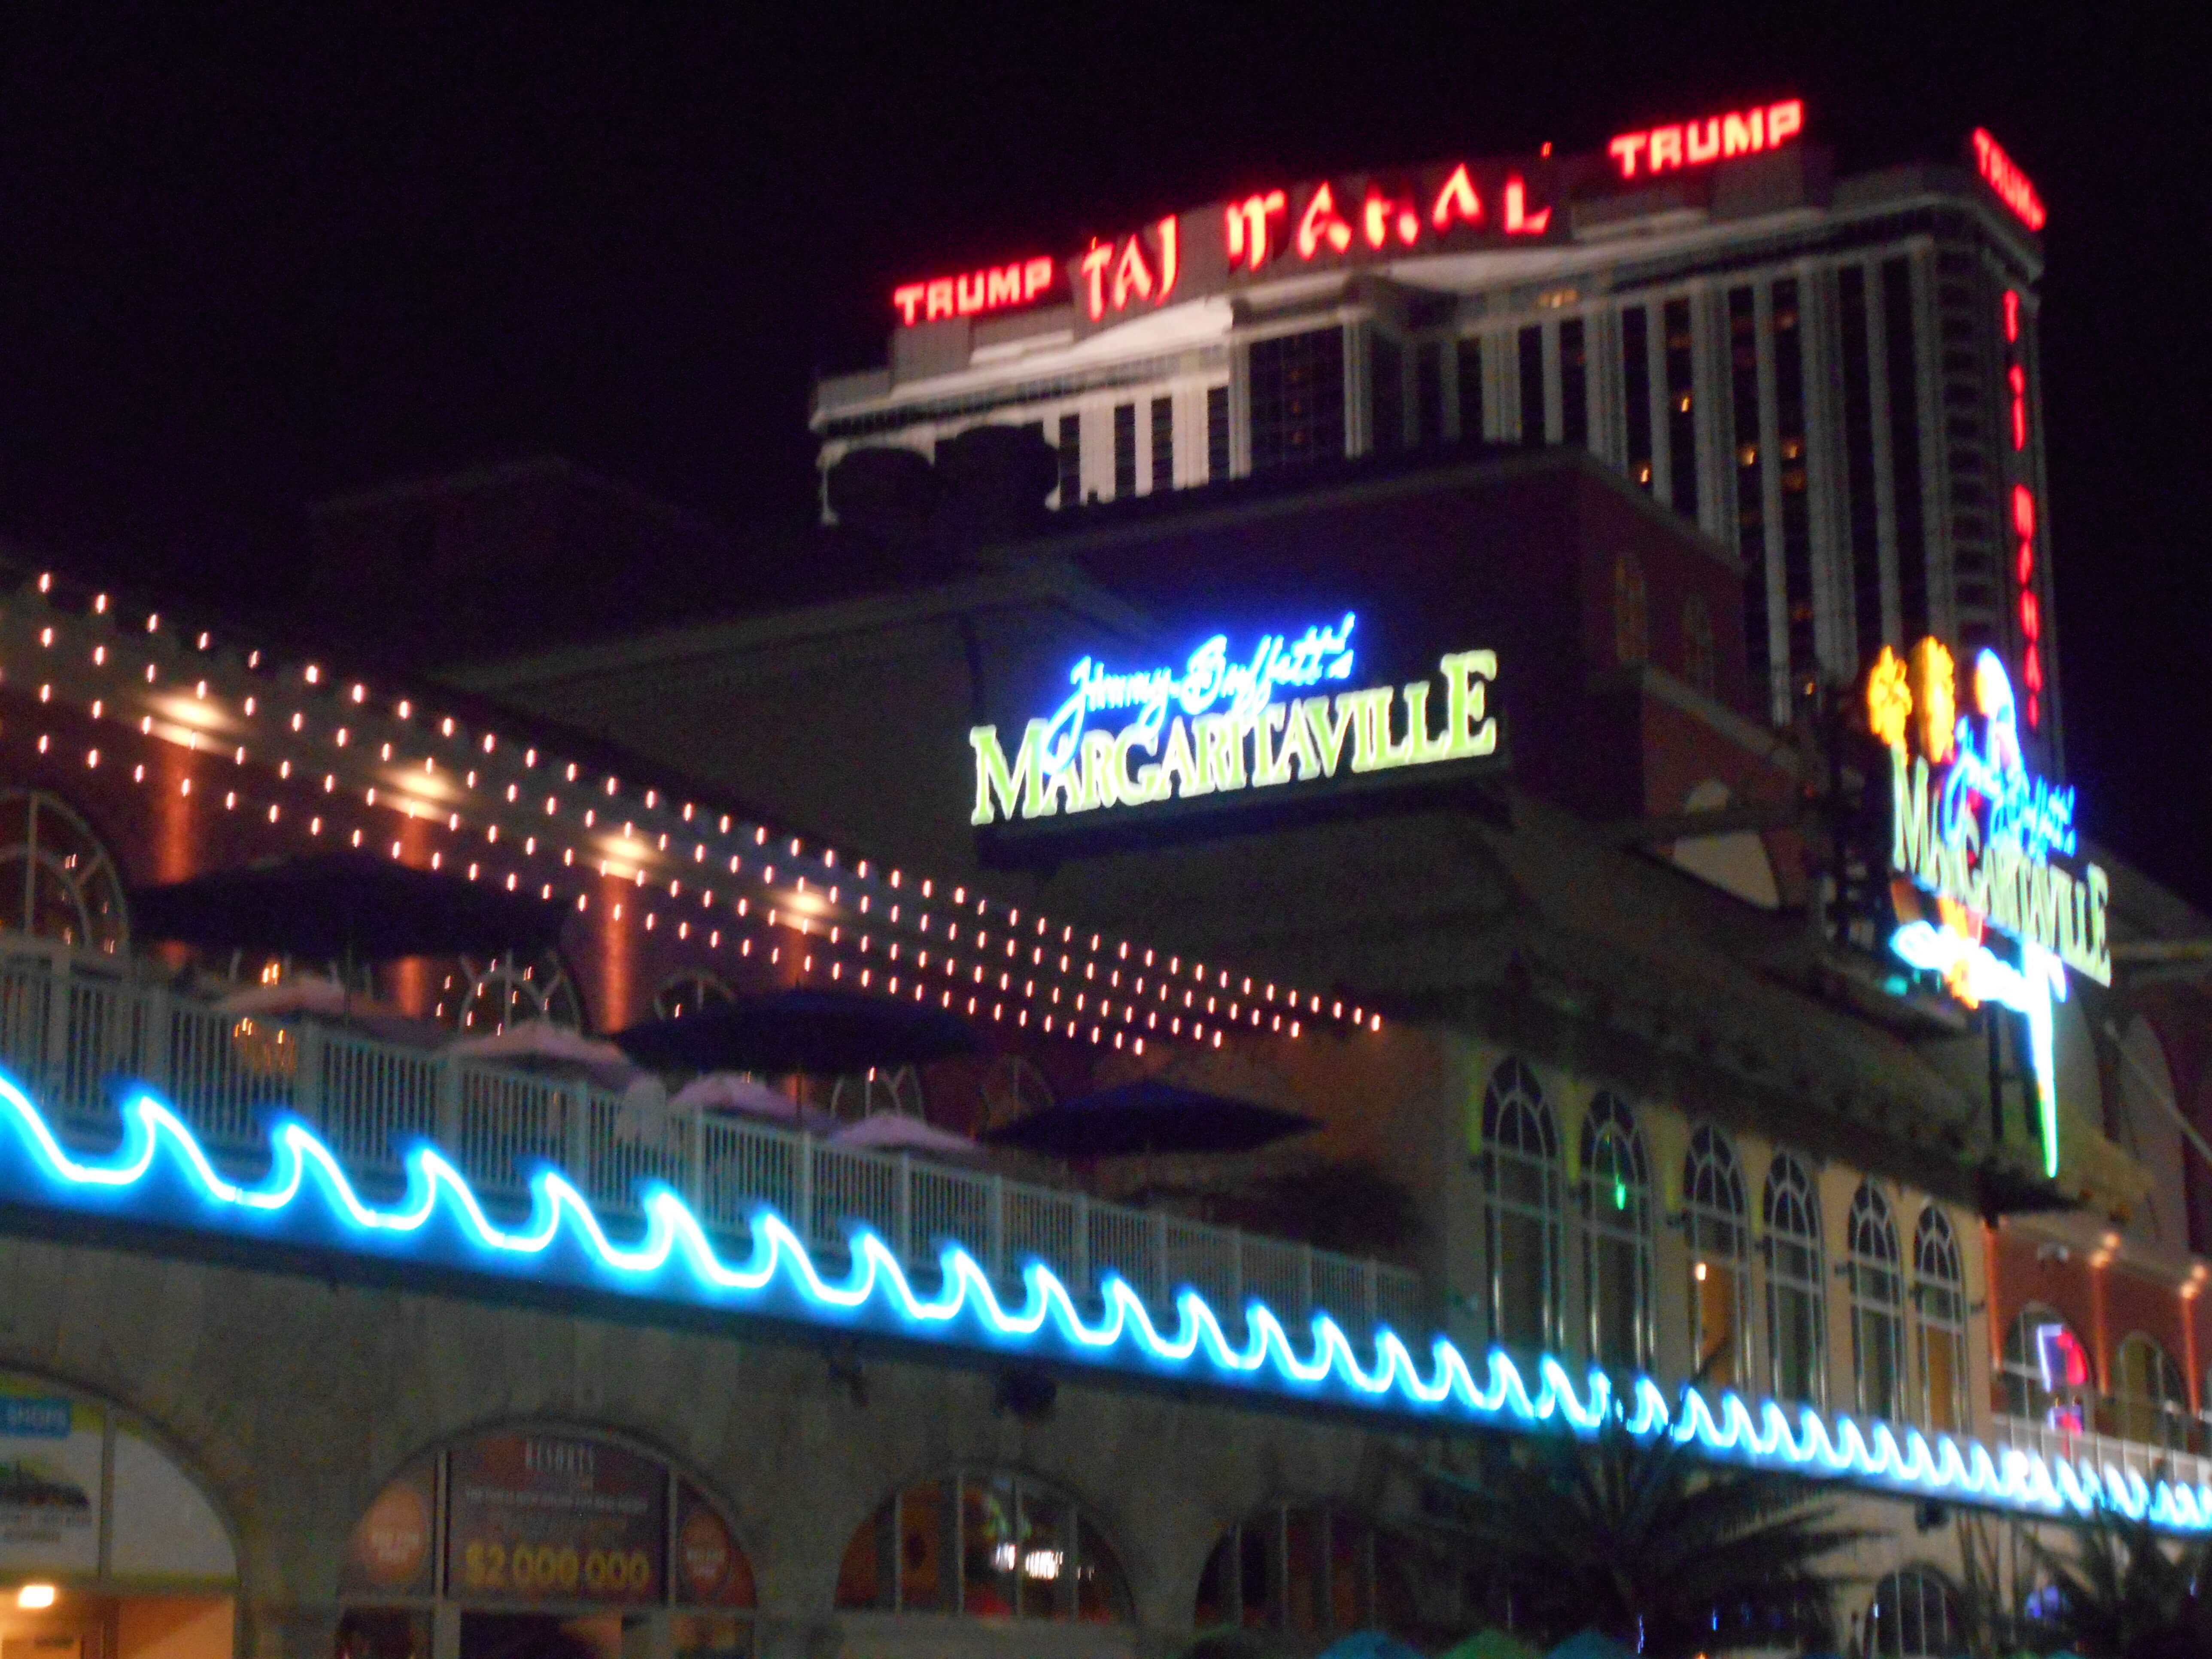 Atlantic City at night